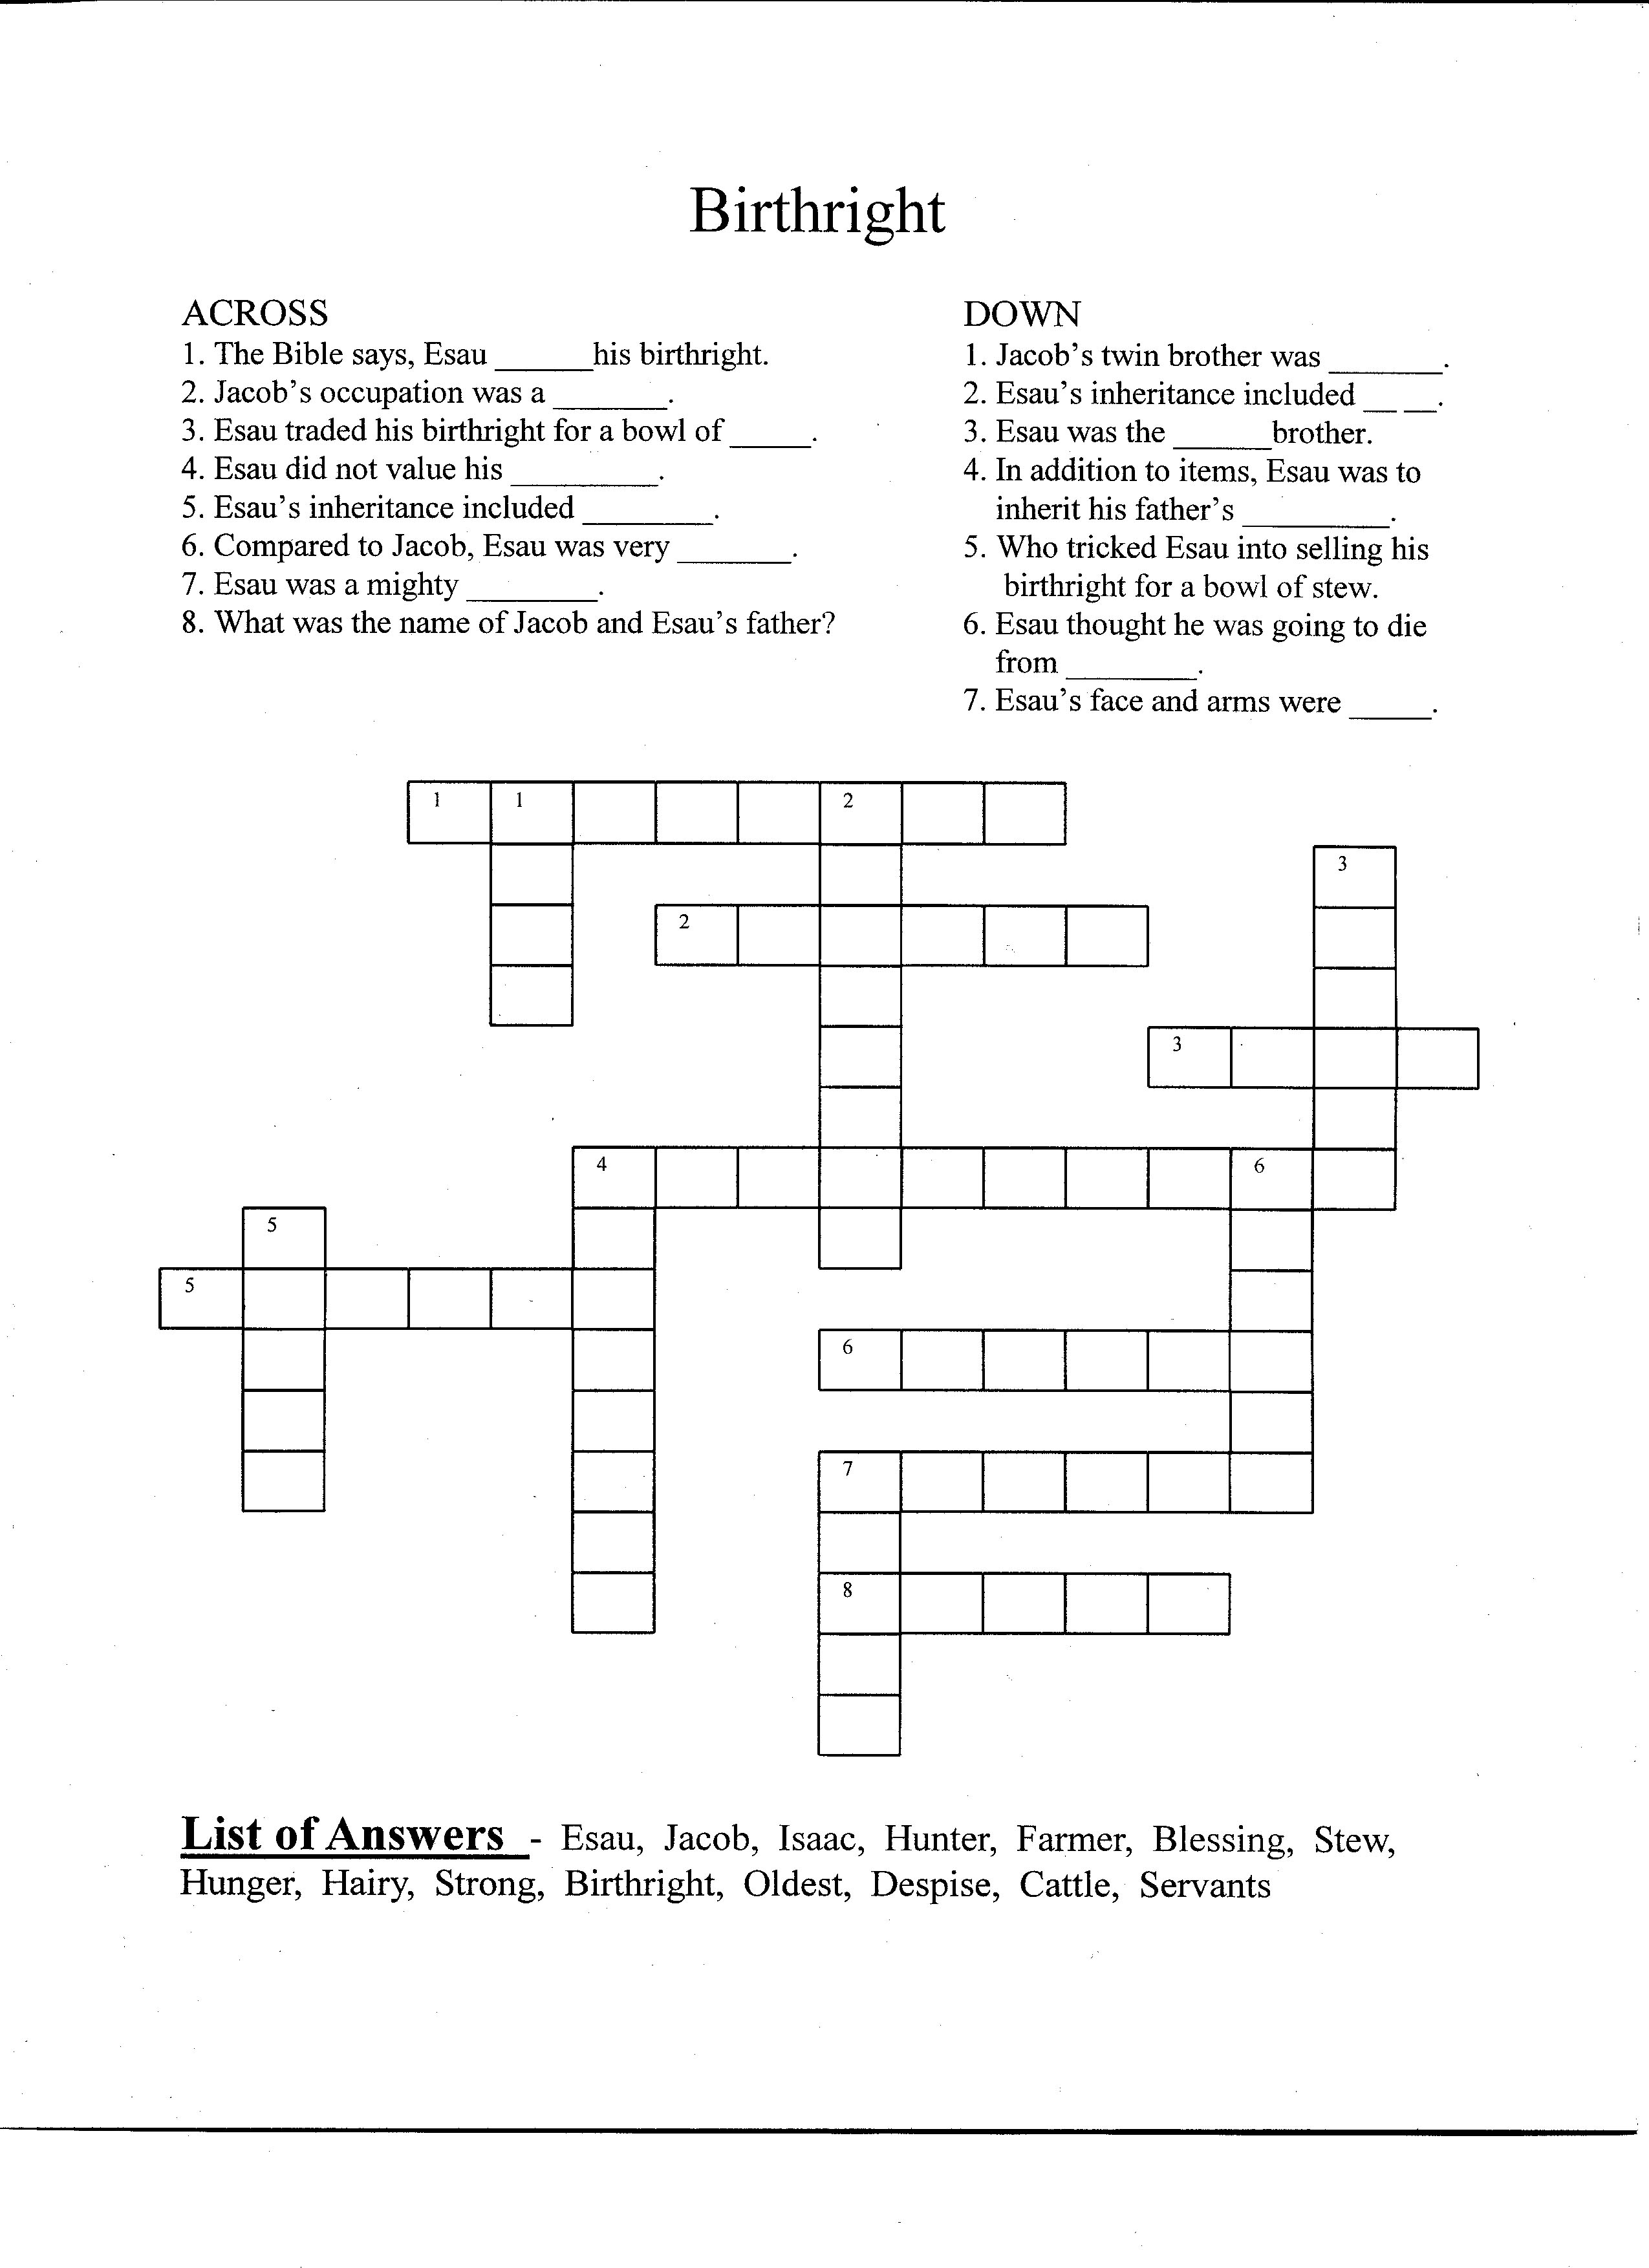 Birthright crossword puzzle